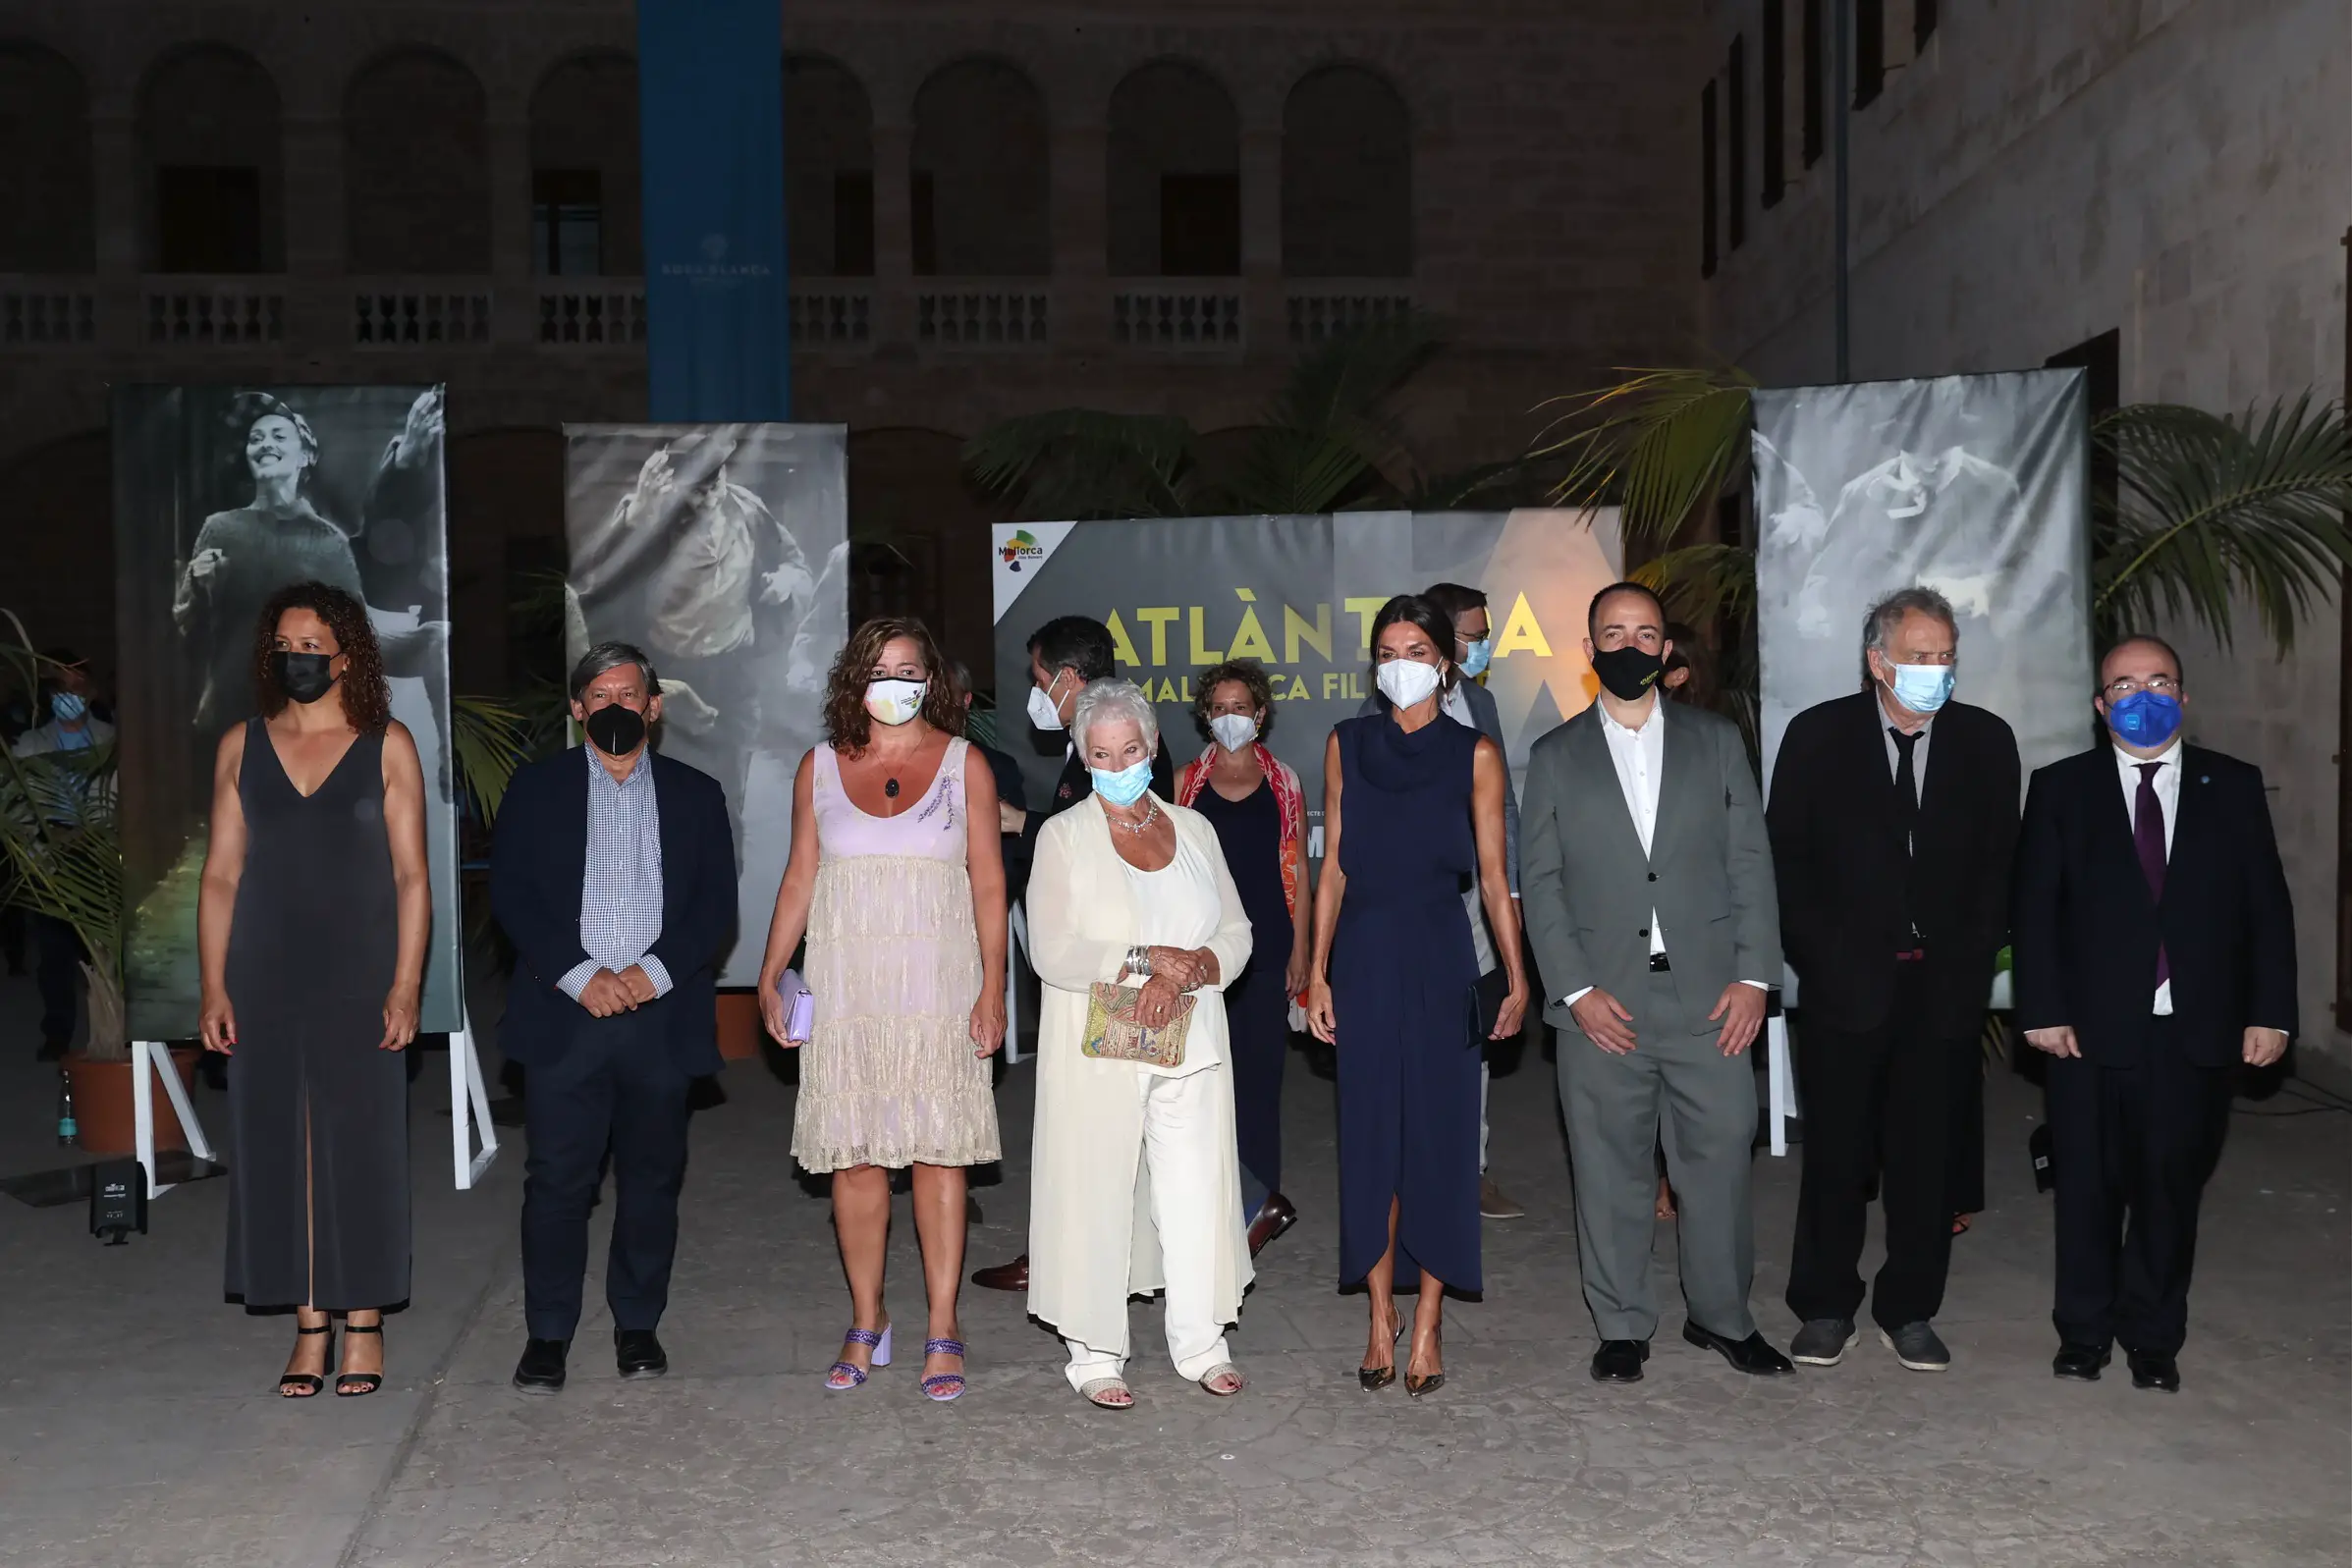 Queen Letizia of Spain over the closing of the 11th edition of the "Atlàntida Mallorca Film Fest 2021"